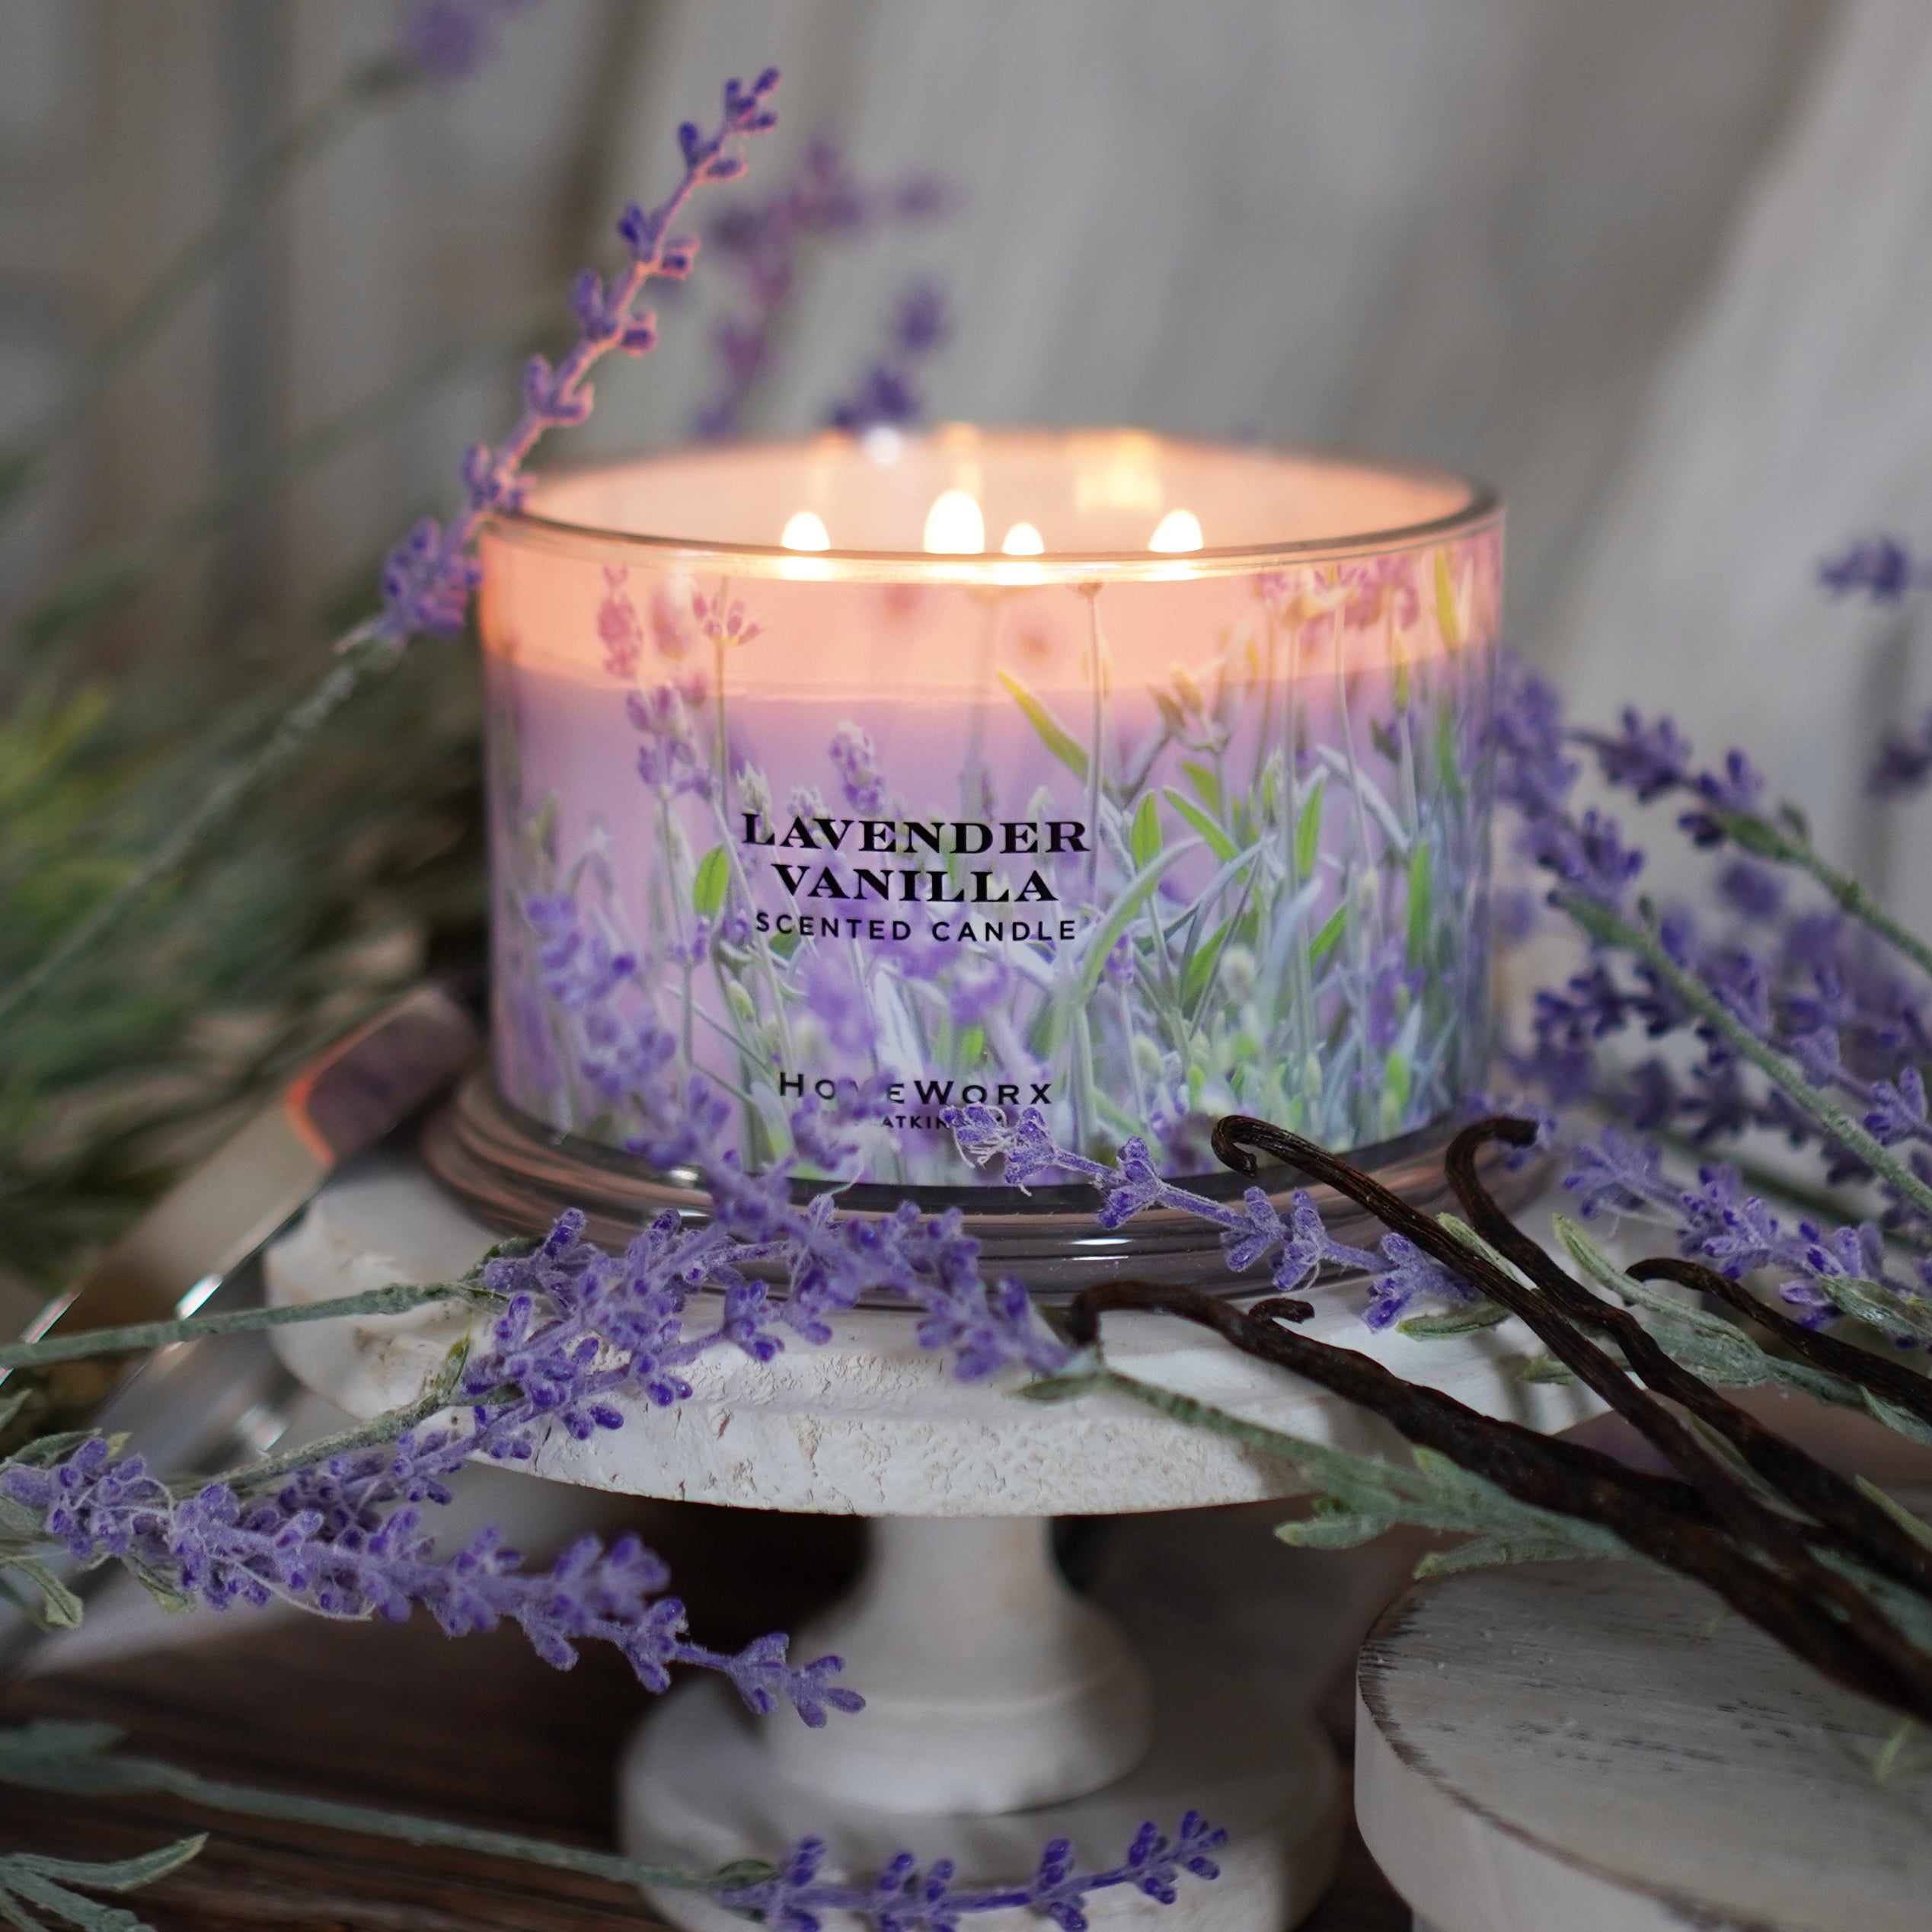 Aroma Depot on Instagram: Discover the enchanting Honey Vanilla